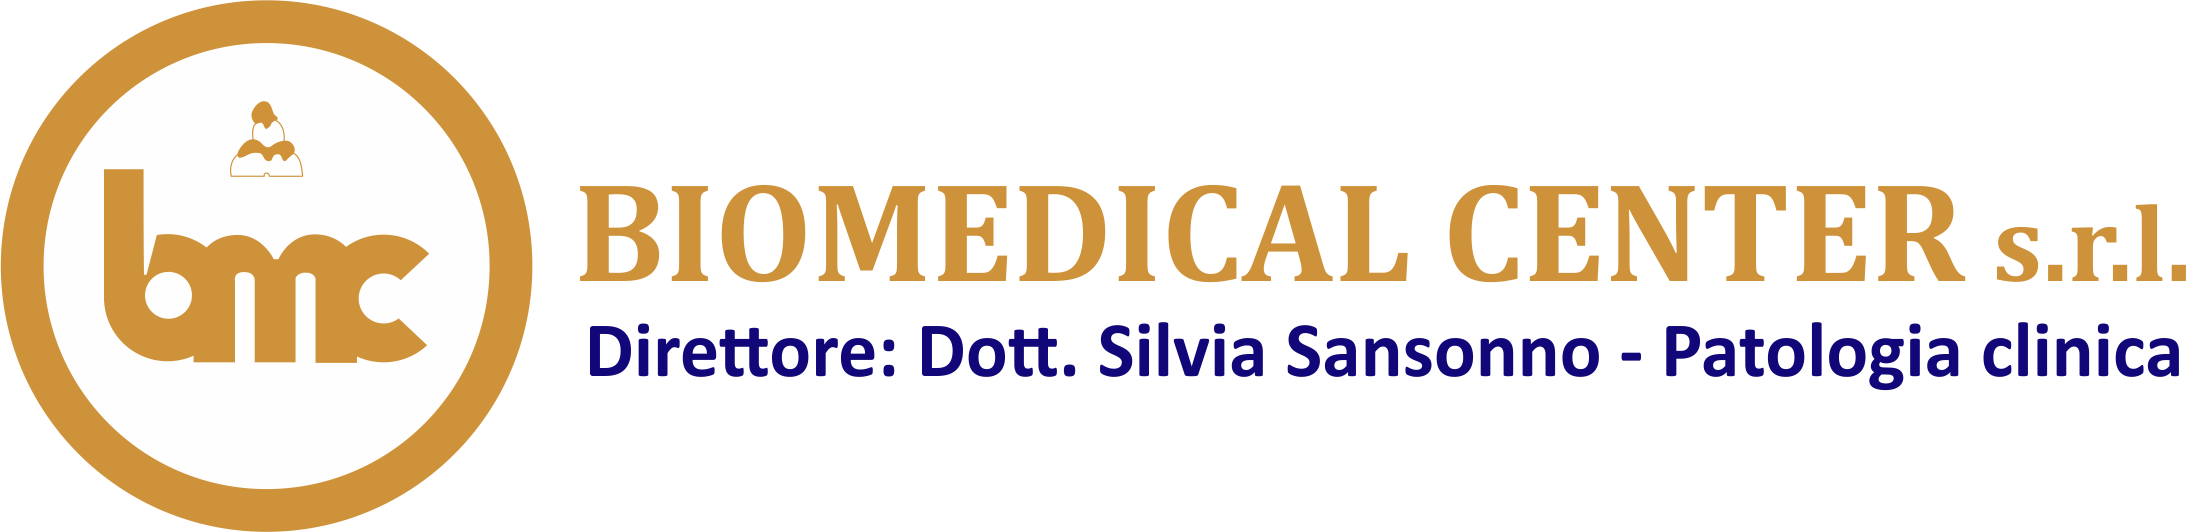 BIOMEDICAL CENTER SRL Logo